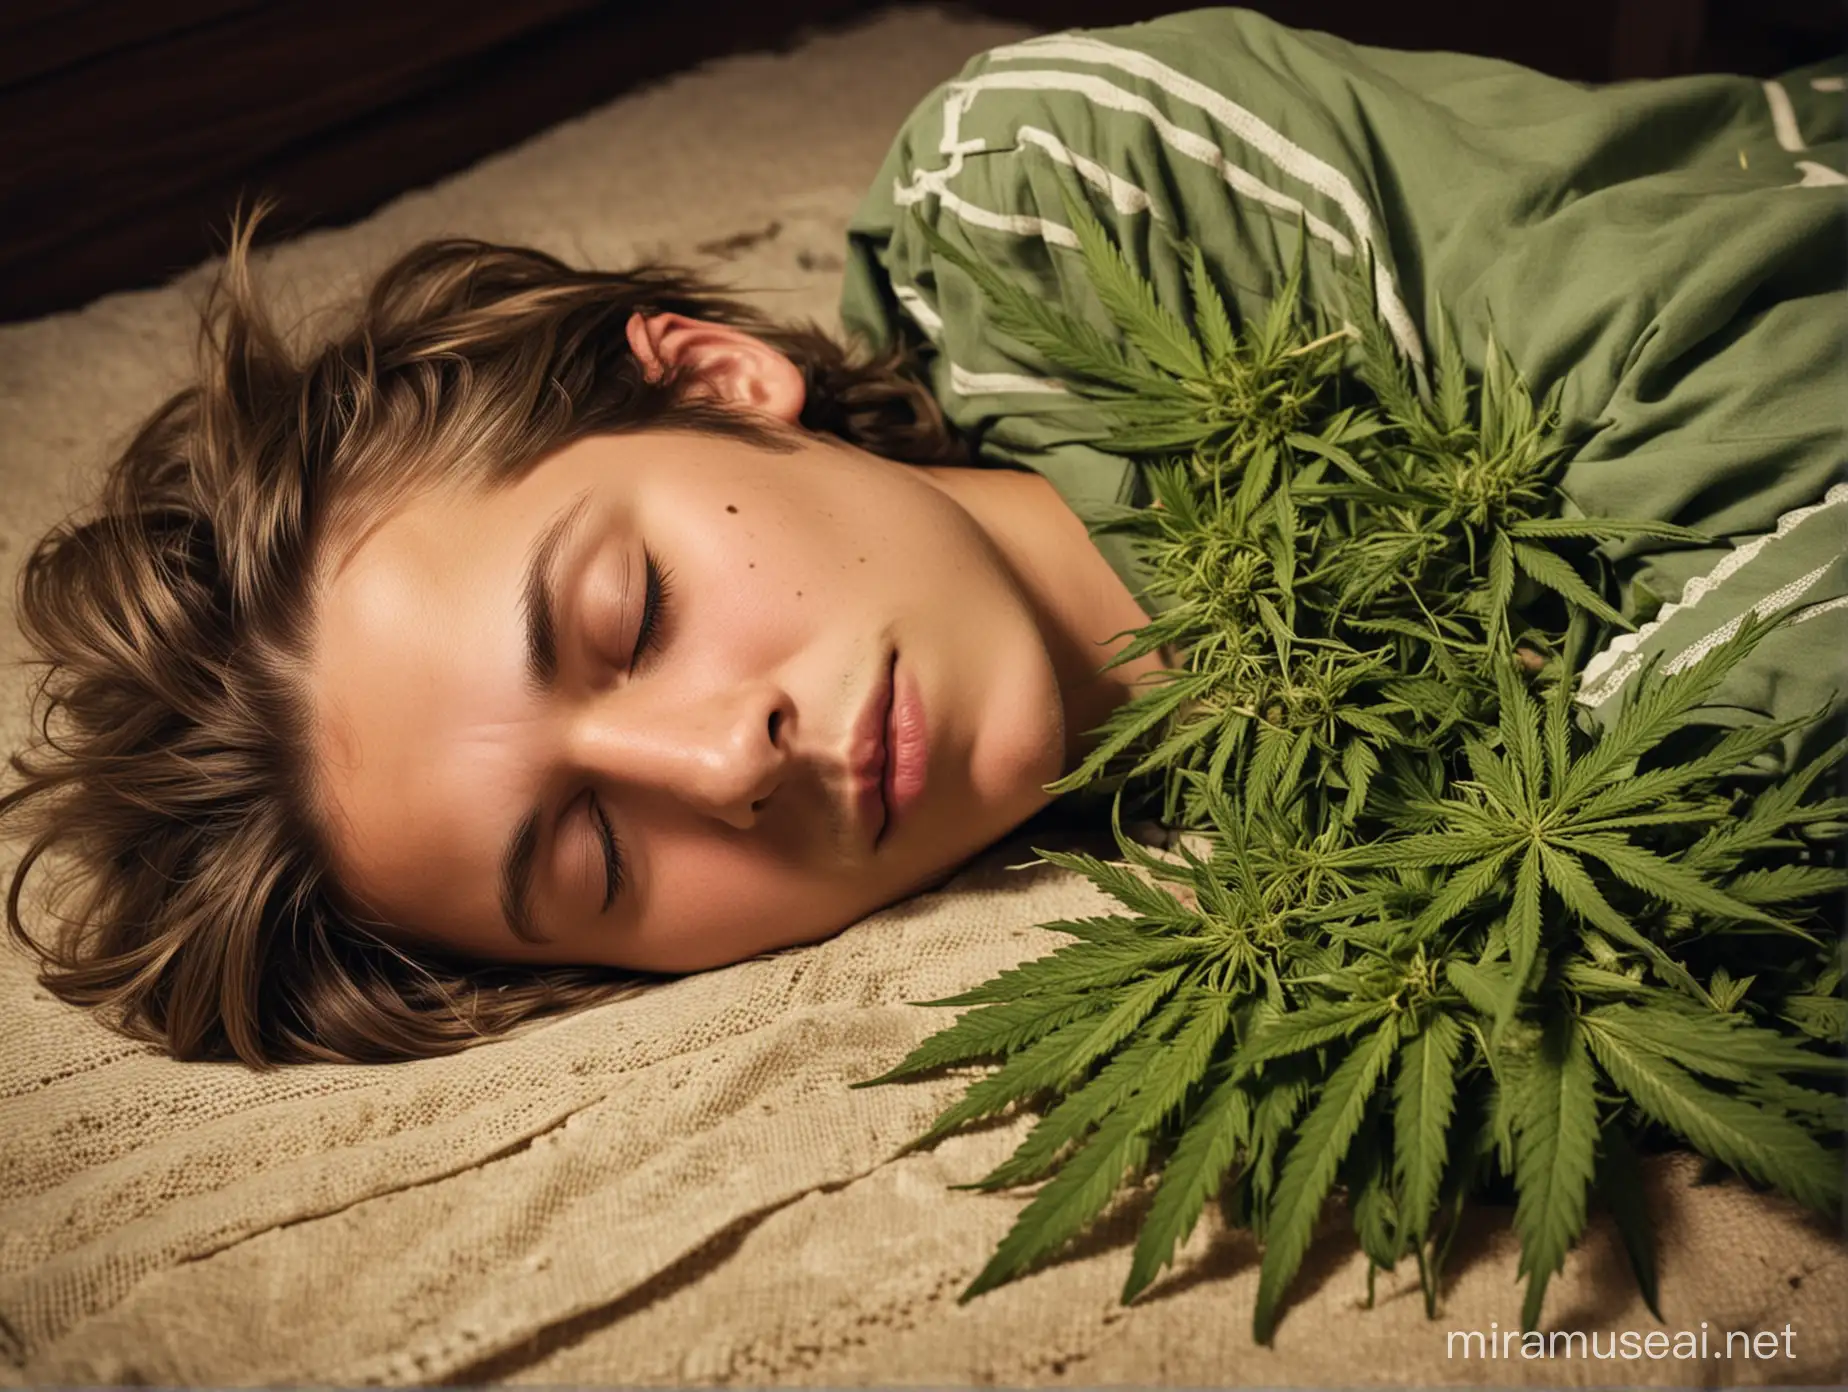 Peaceful Drunken Slumber Sleeping Boy Surrounded by Cannabis